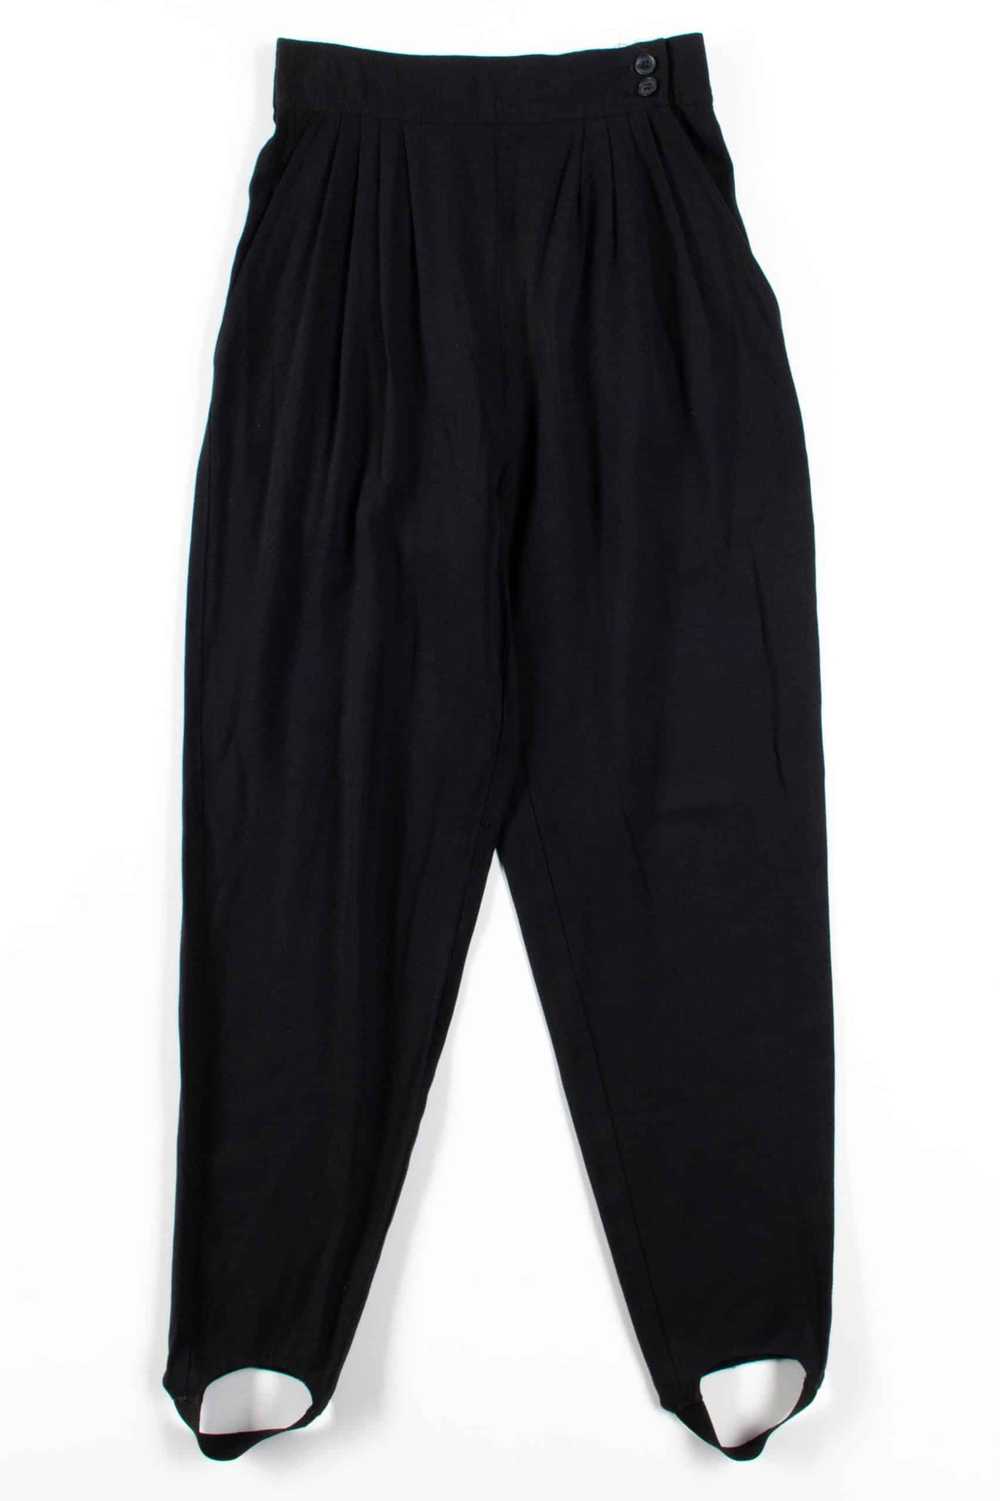 Black Pleated Pants w/ Stirrups (sz. 8) - image 2